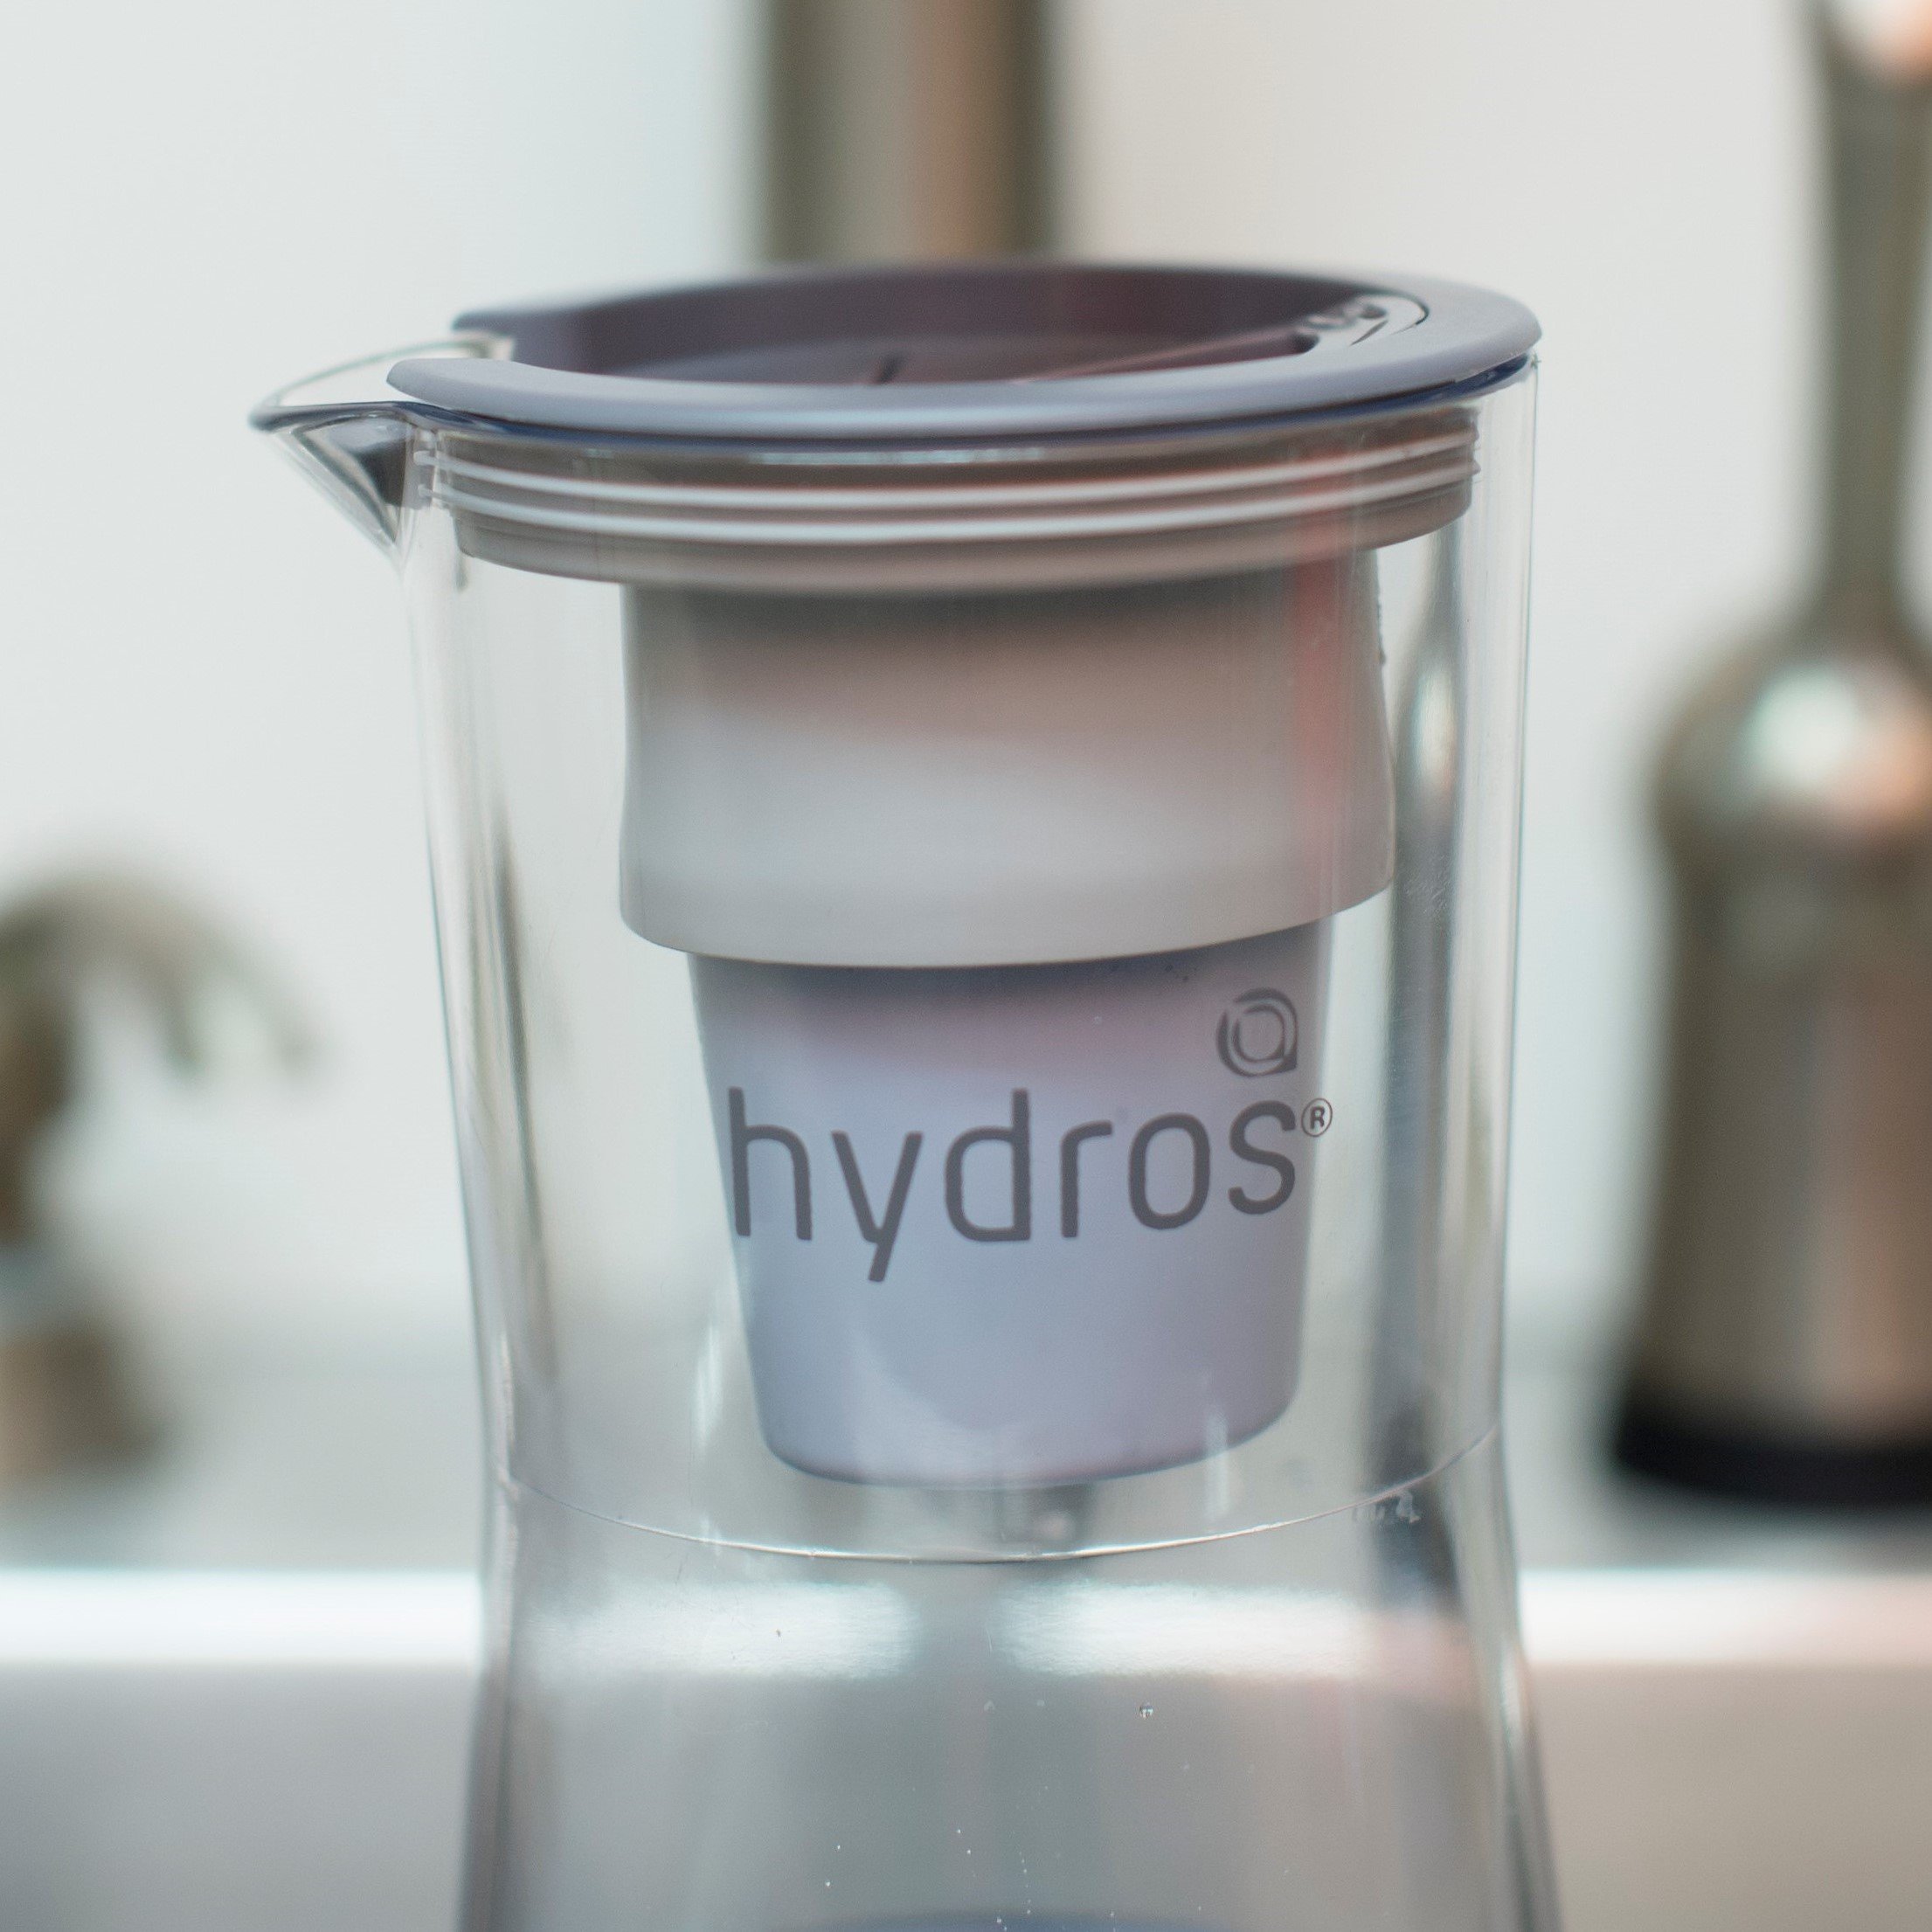 Hydros Water Filtration System Innovation by Nottingham Spirk